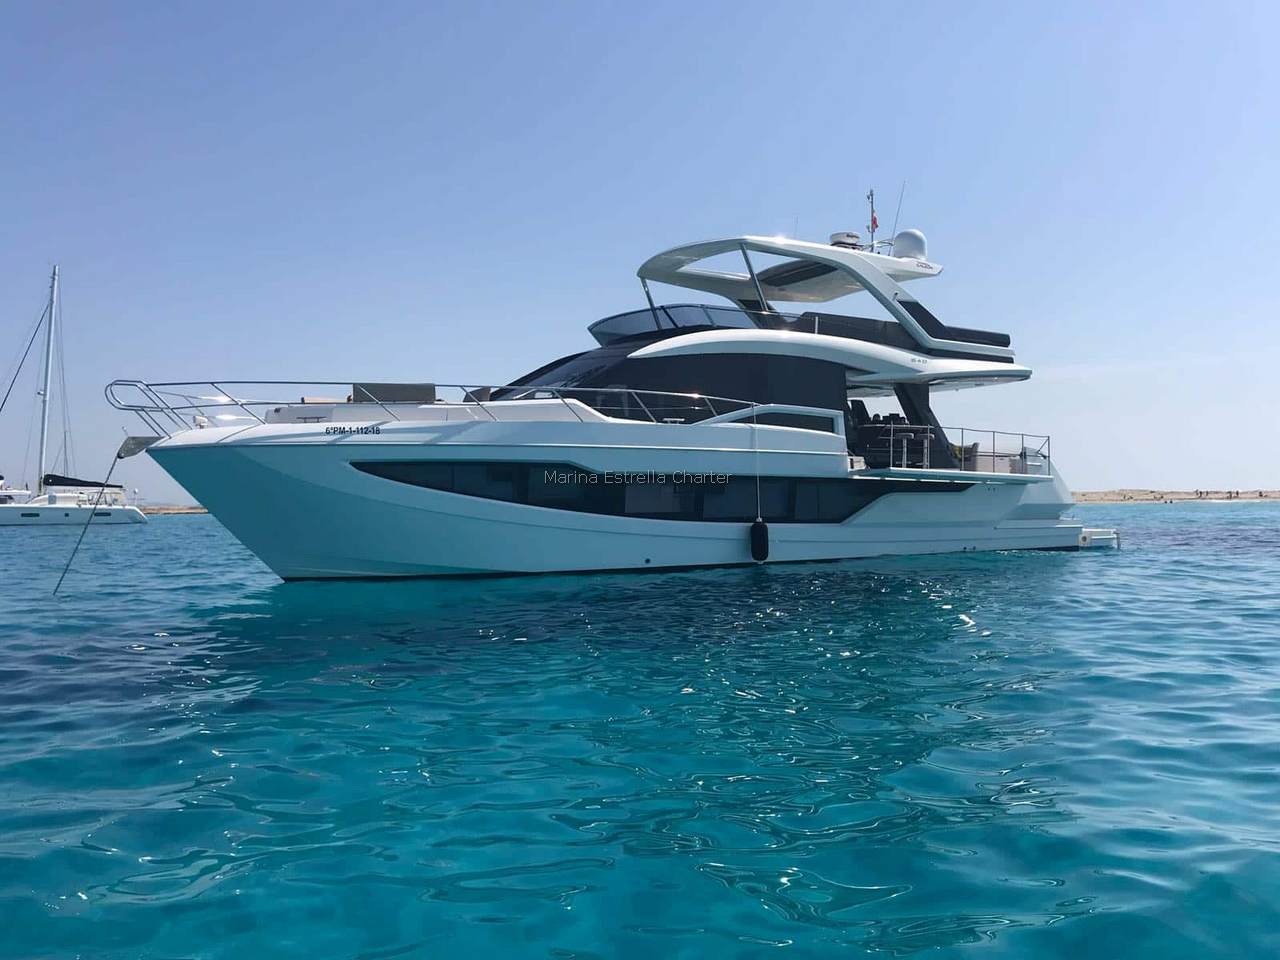 Power boat FOR CHARTER, year 2018 brand Galeon and model 640 Fly, available in Port Esportiu Port Adriano Calvià Mallorca España